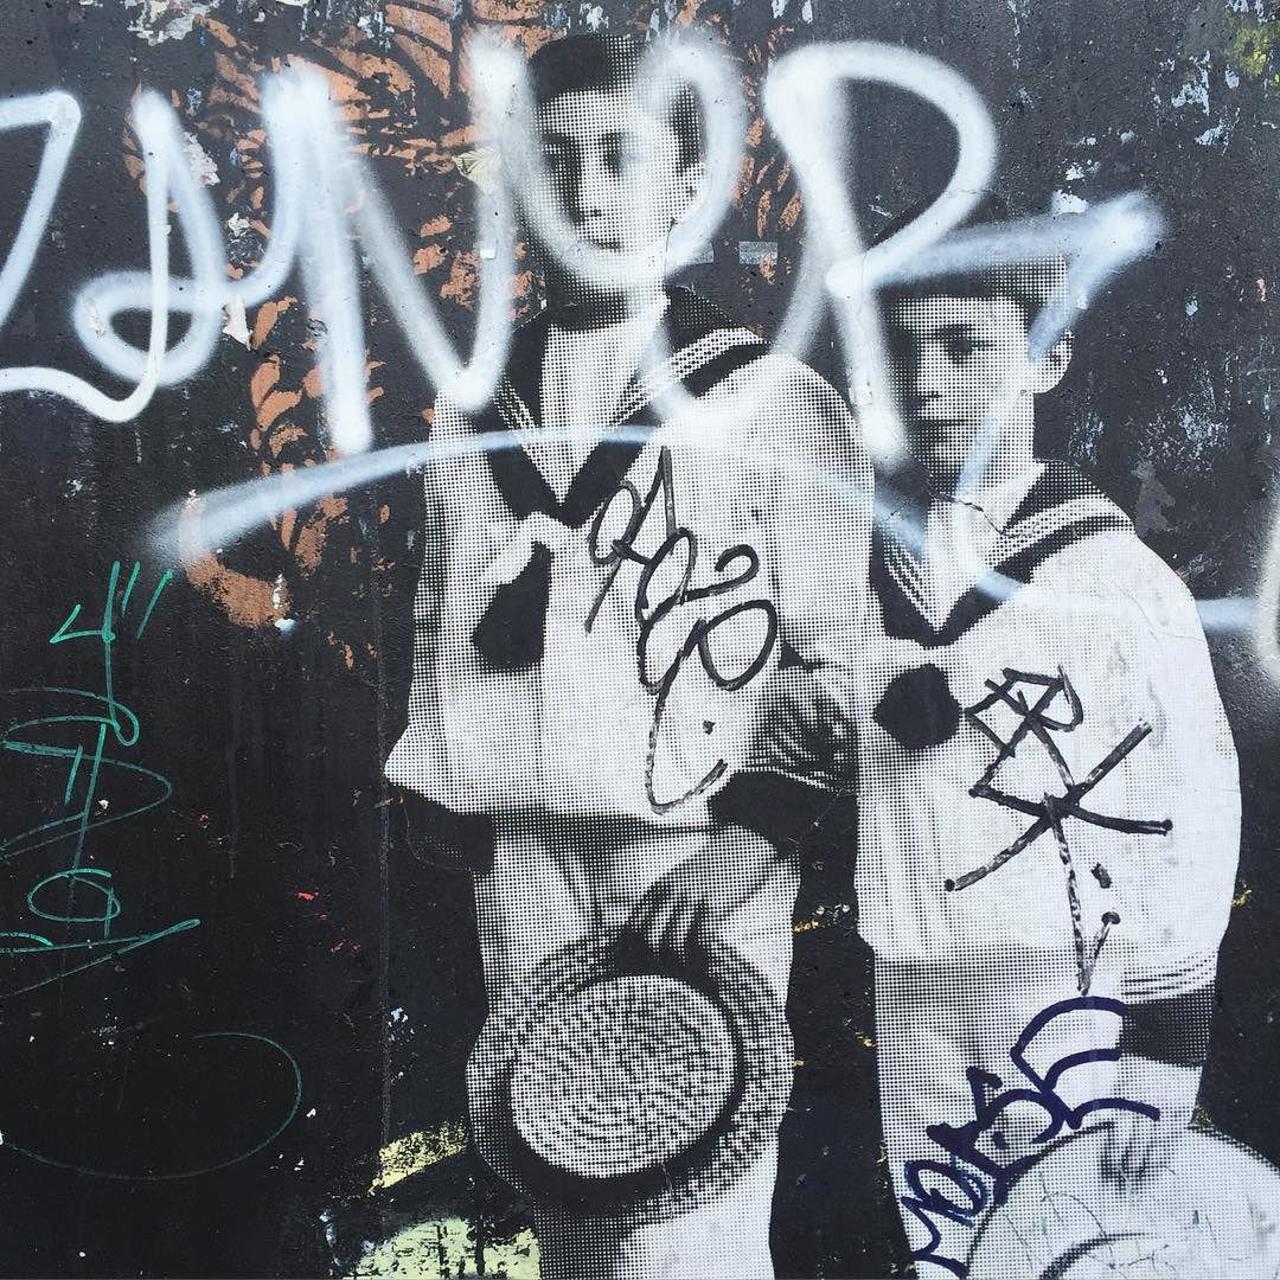 #Paris #graffiti photo by @catscoffeecreativity http://ift.tt/1X08PGK #StreetArt http://t.co/o5BS1vkanQ